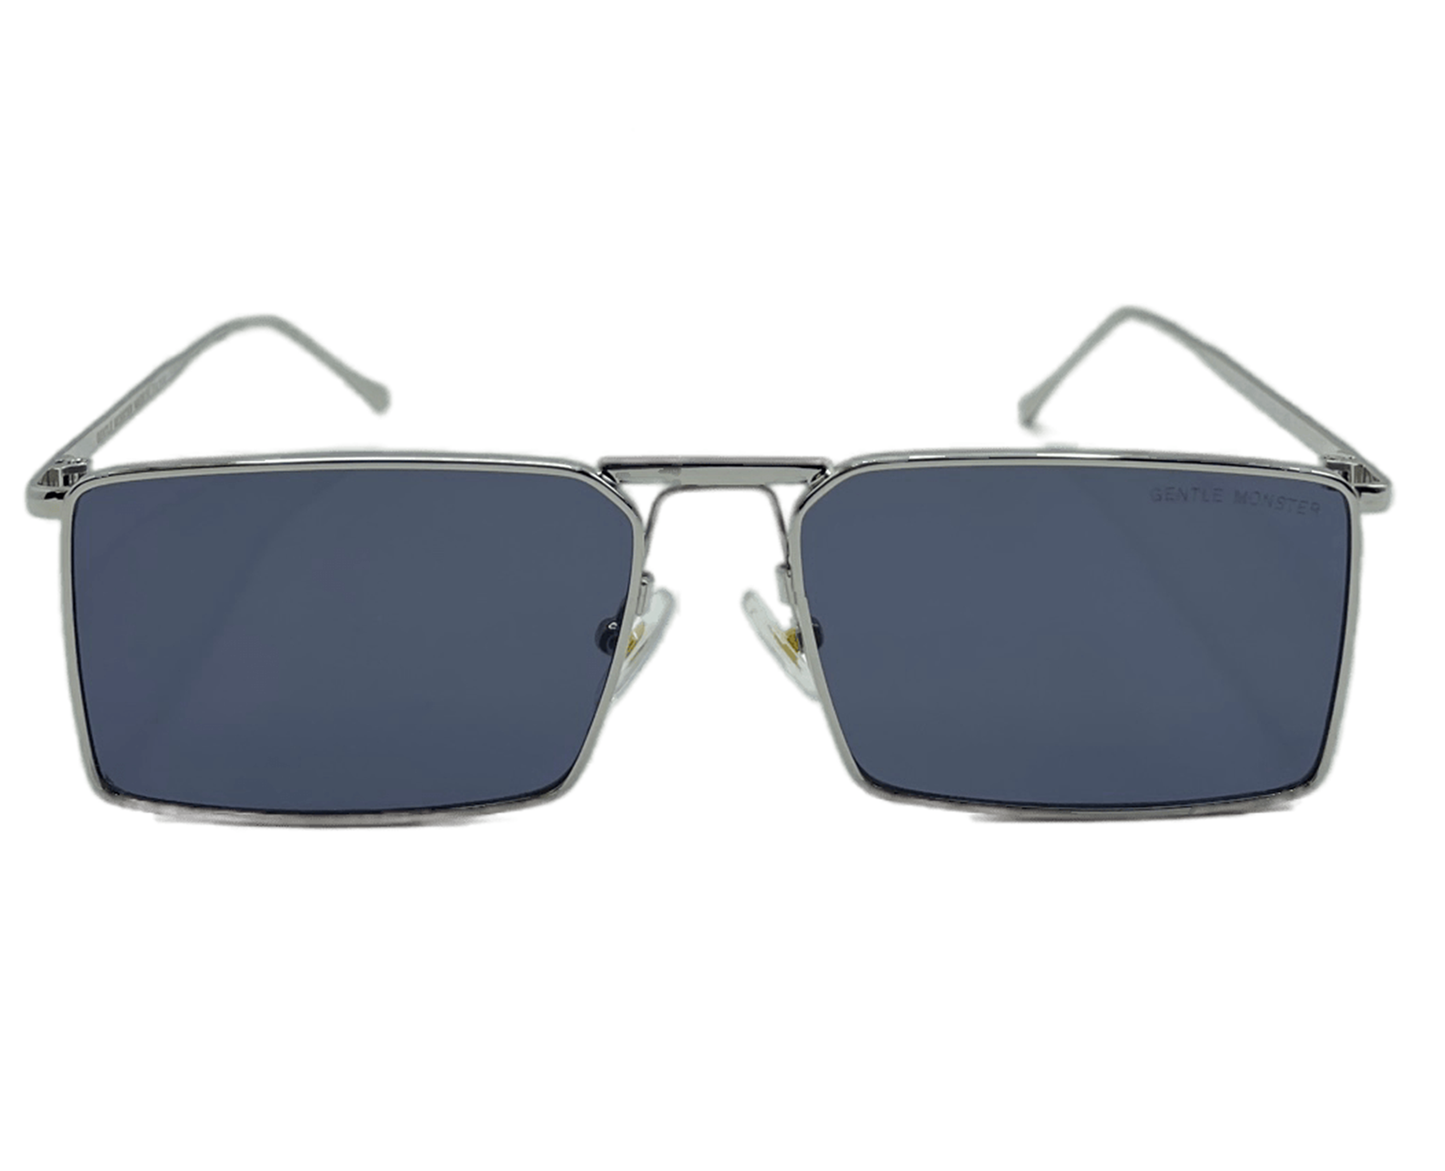 NS Deluxe - 2057 - Silver - Sunglasses